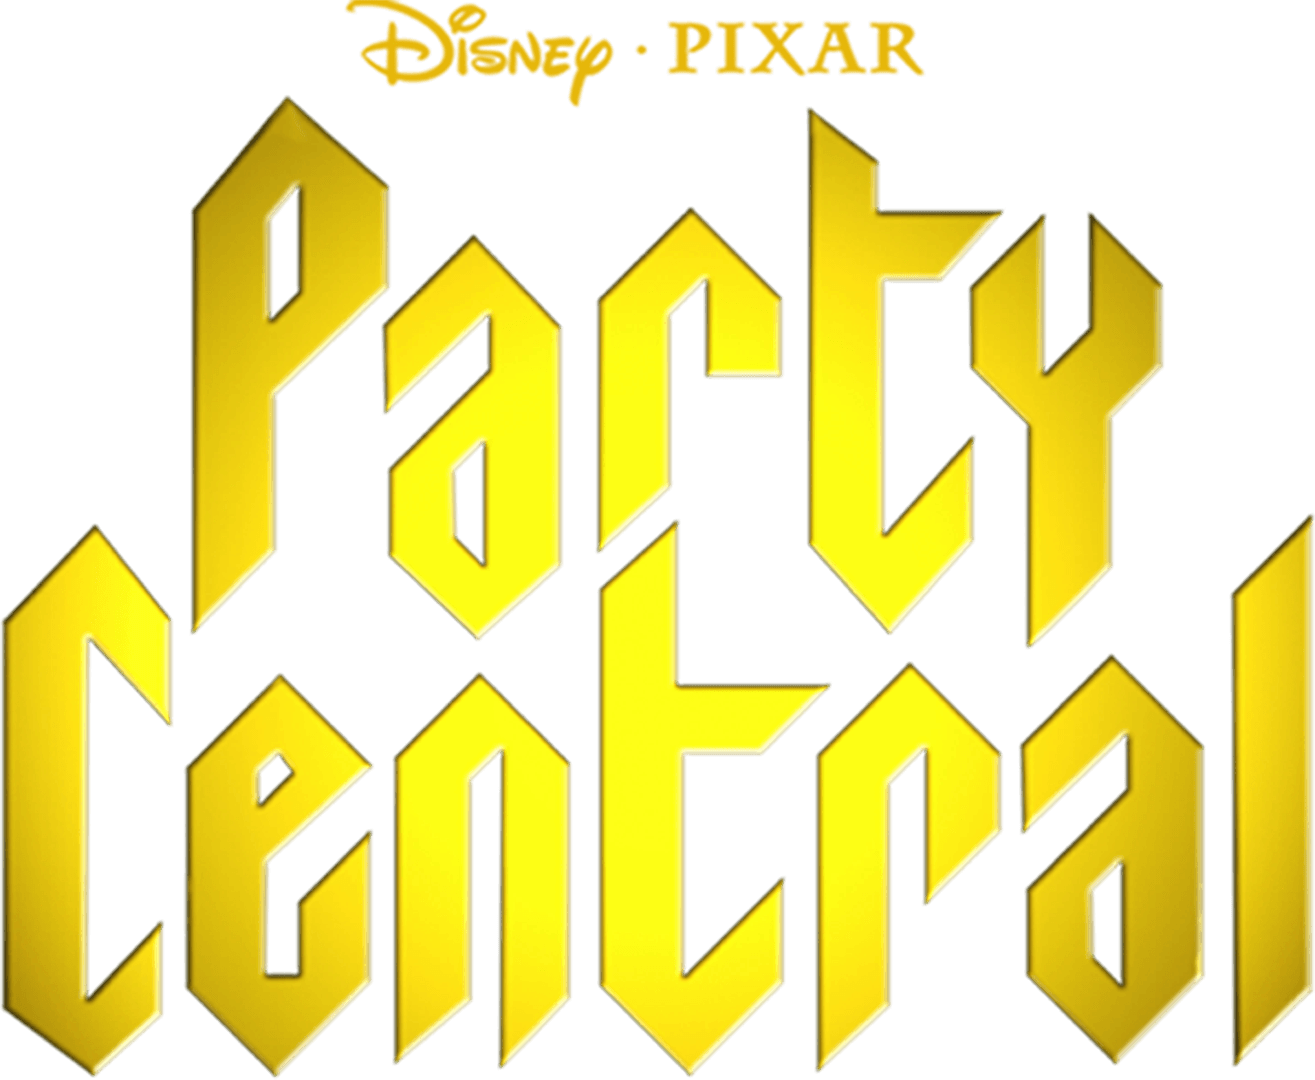 Party Central logo